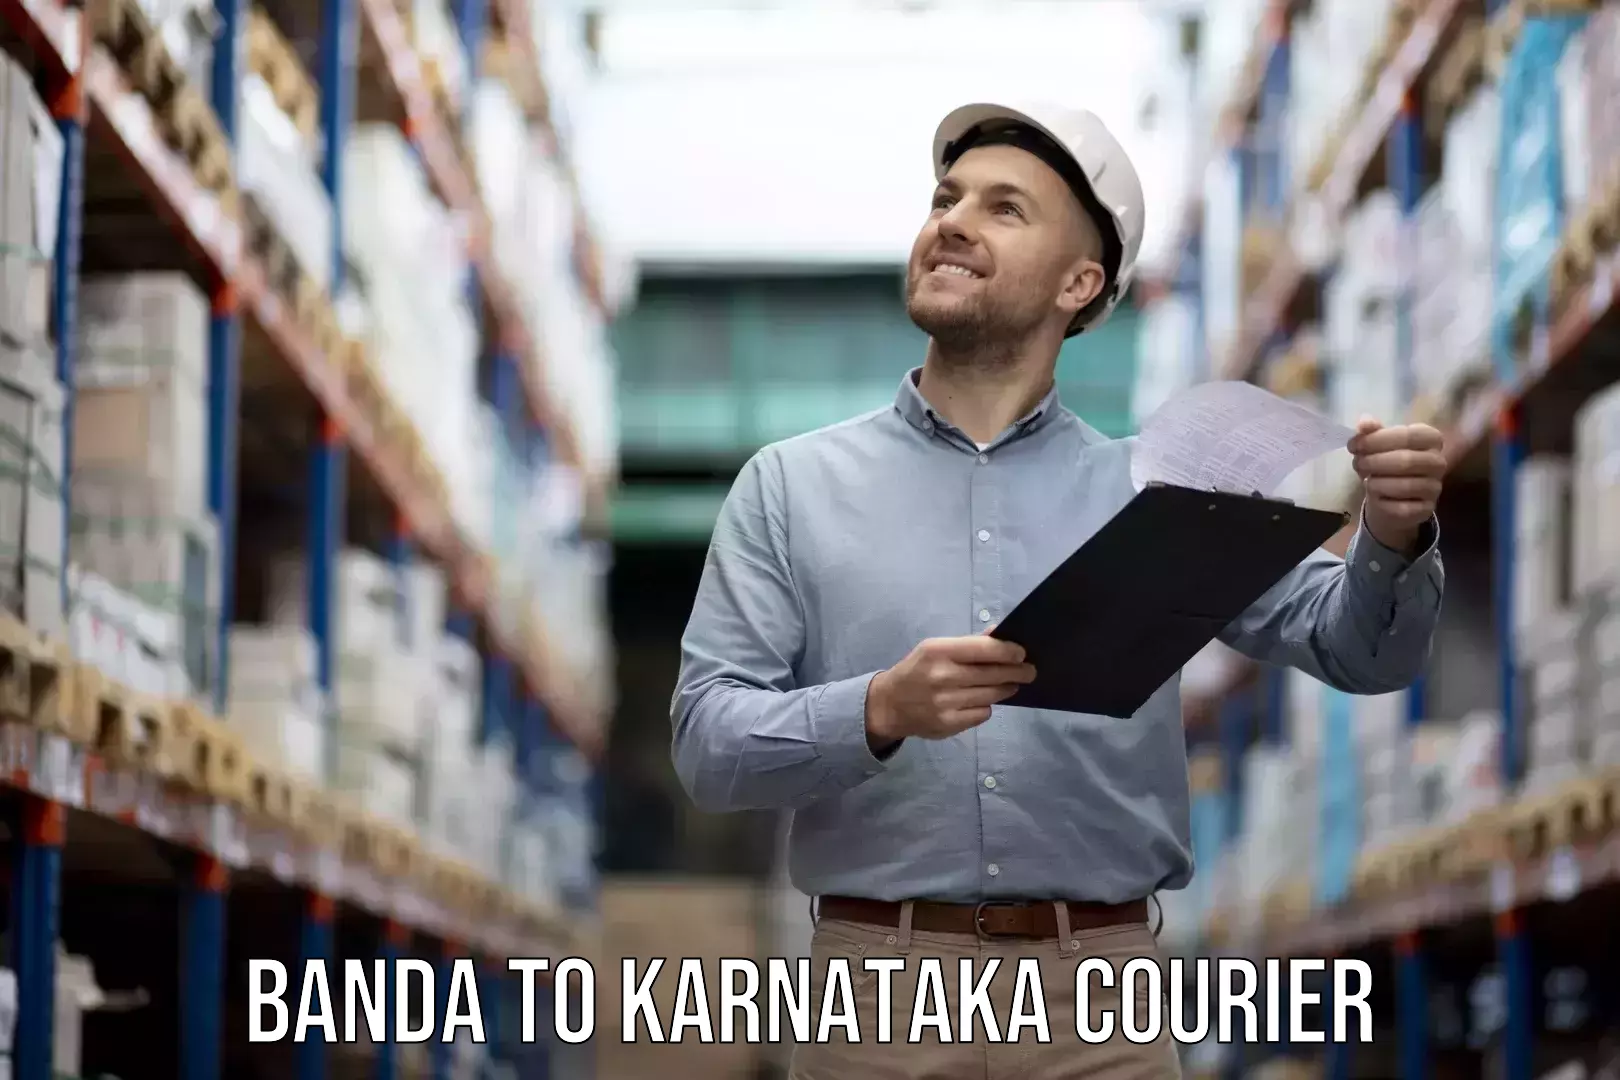 Professional moving company Banda to Karnataka